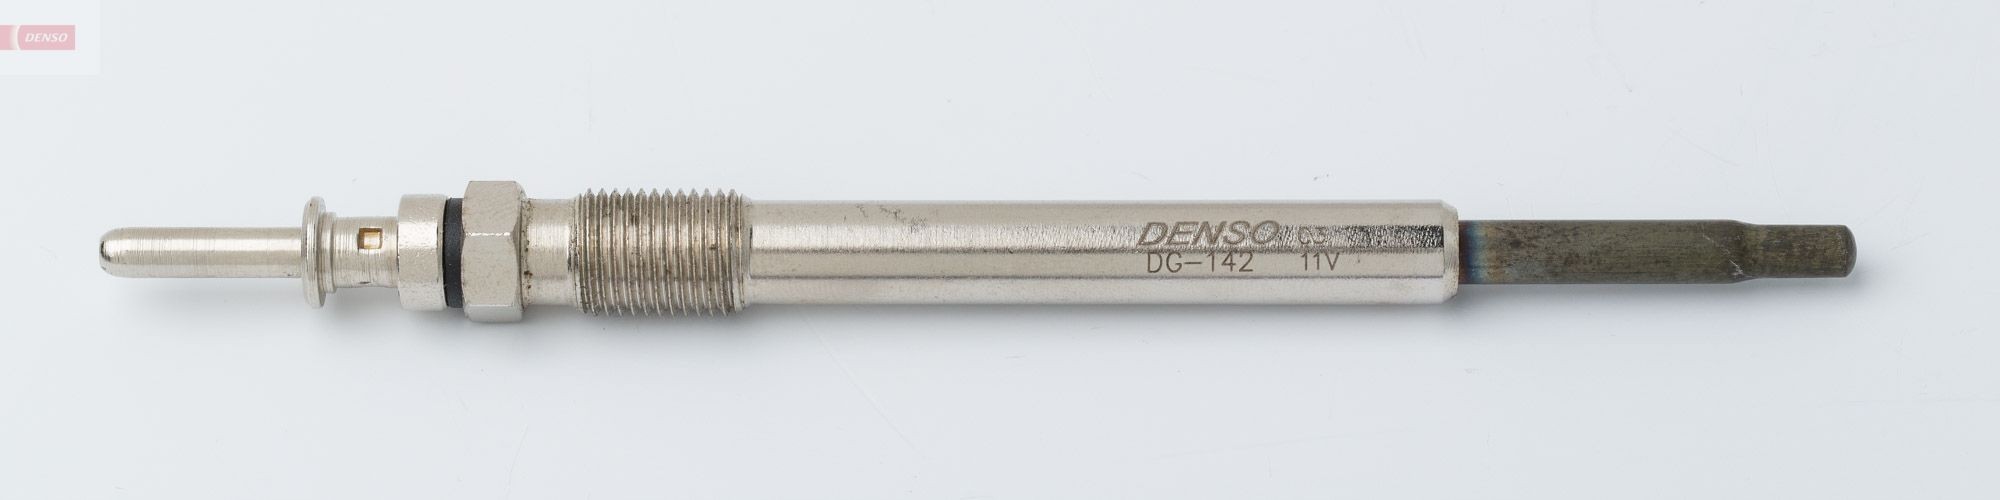 DENSO DG-142 Glow plug 93.178.225